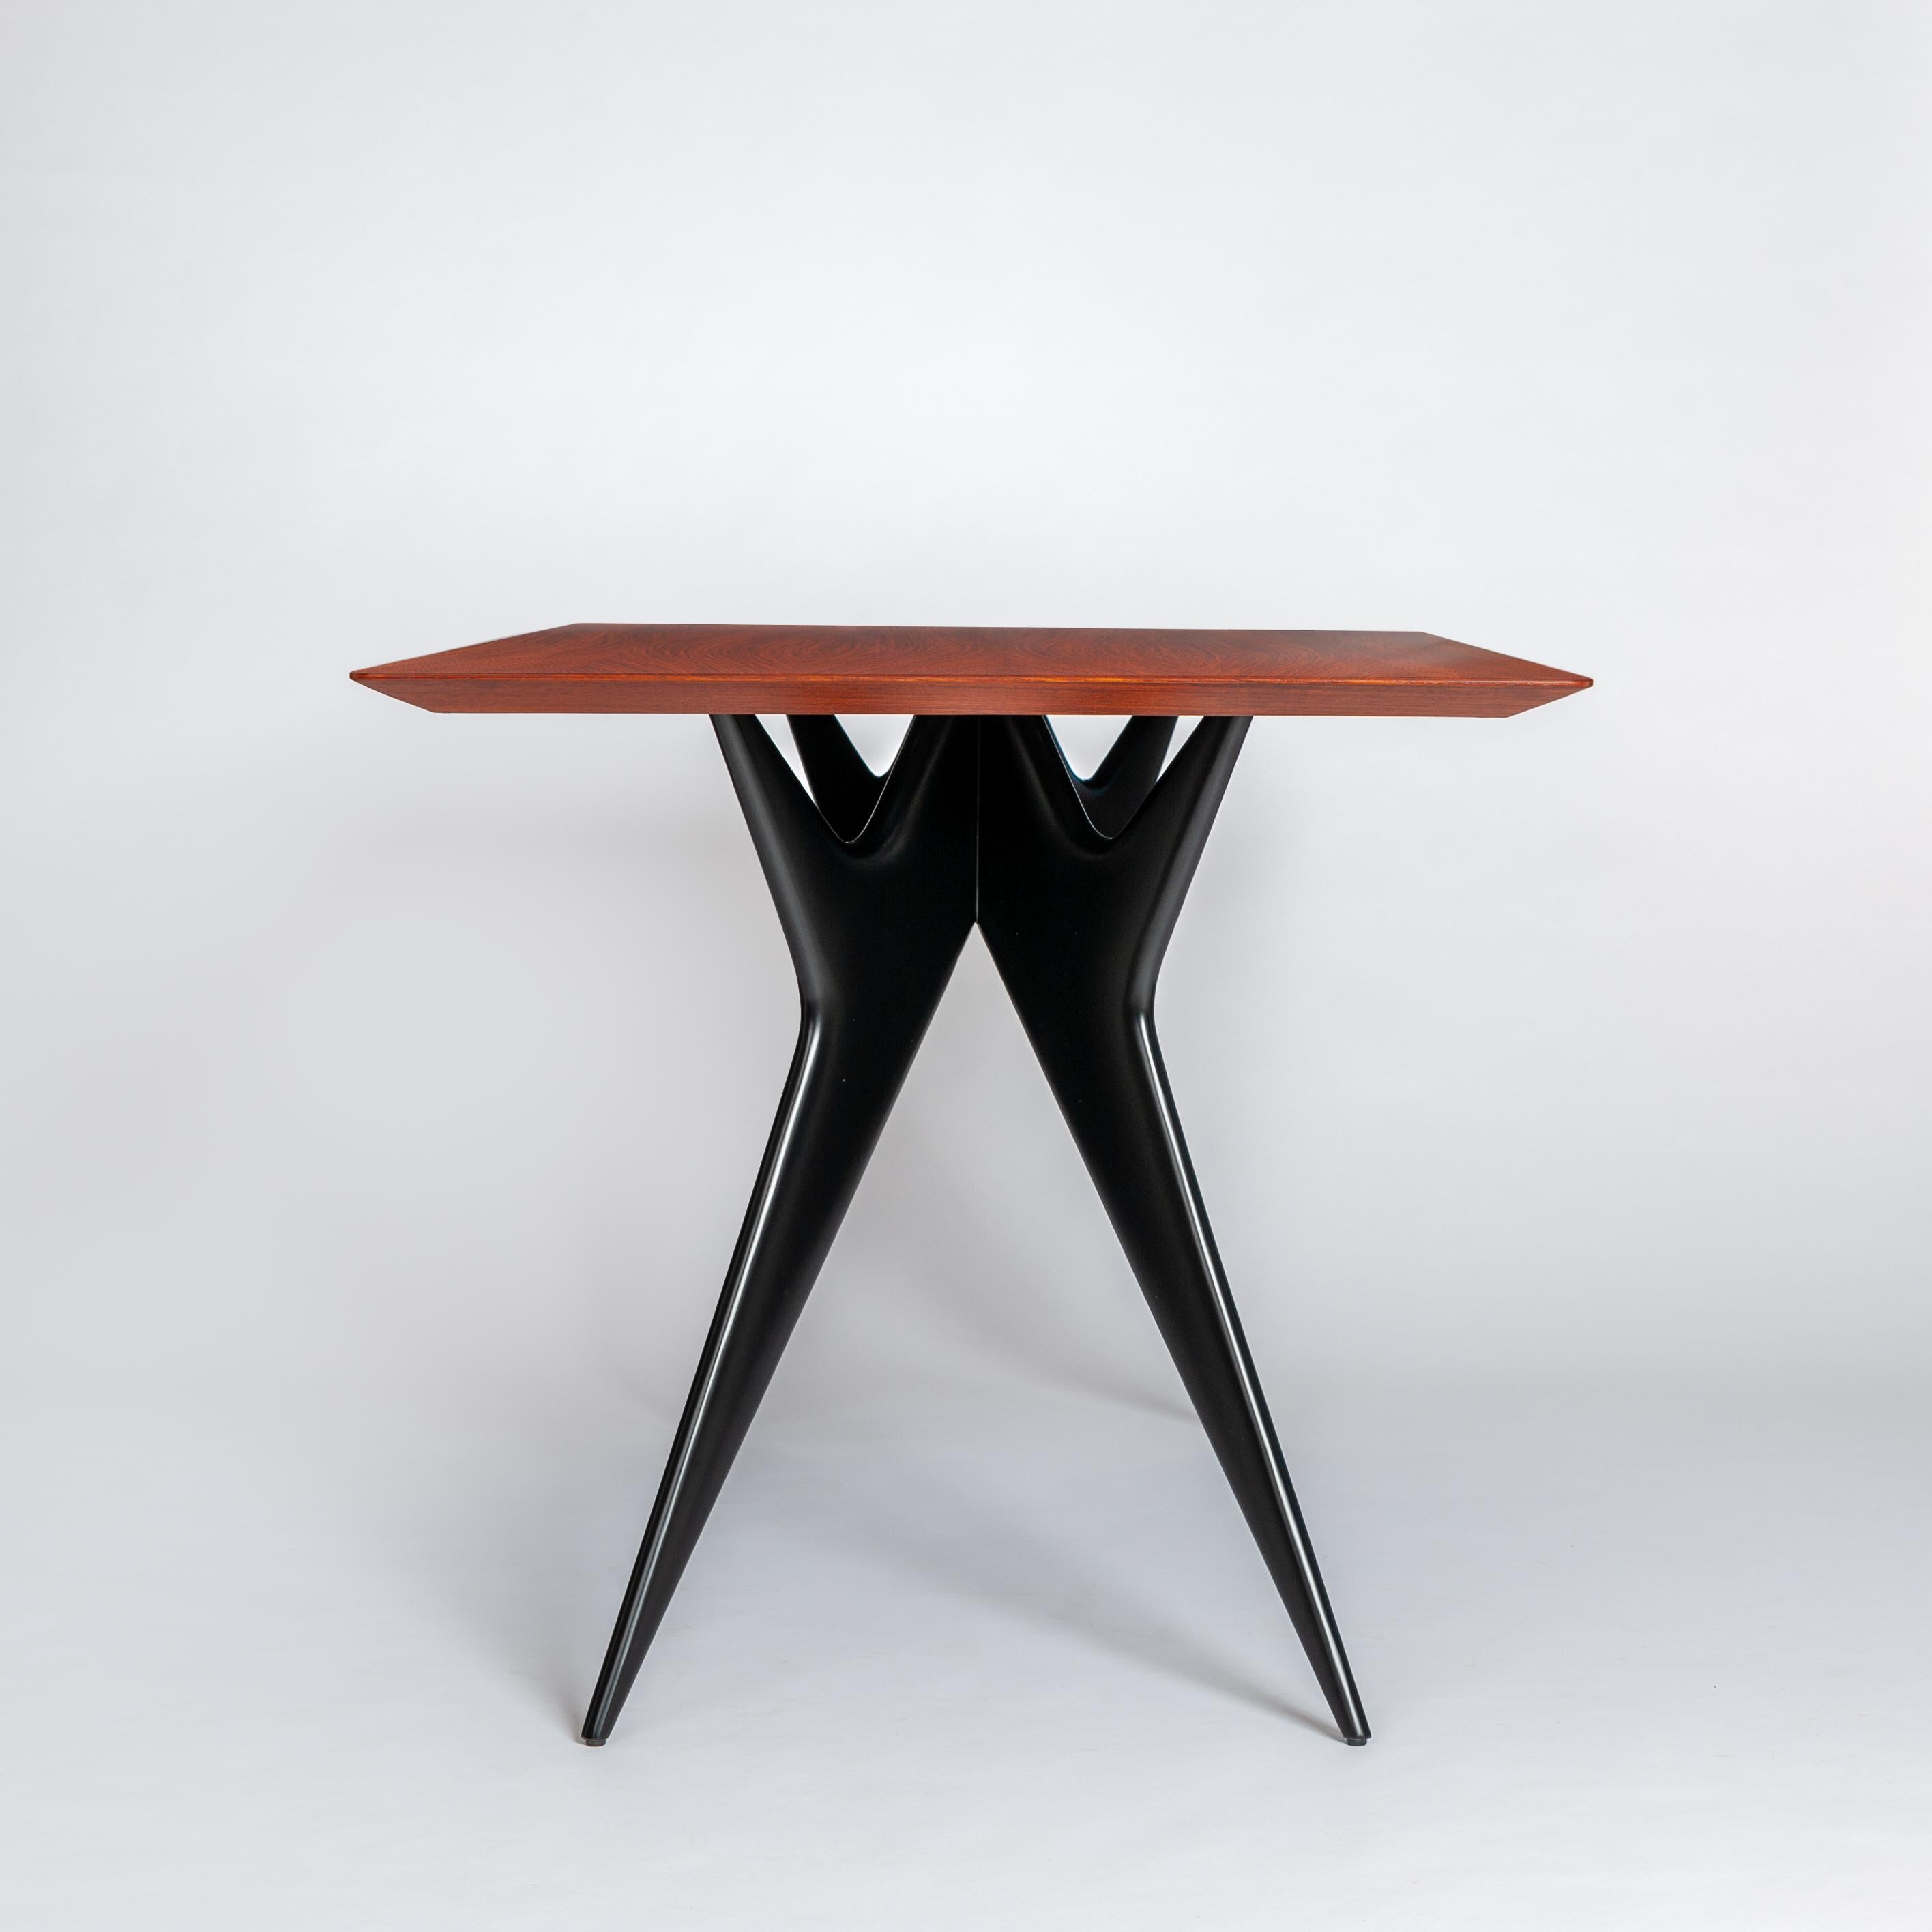 Mid-20th Century Italian Midcentury Dining Table / Desk Rosewood Wood Veneer by Ico Parisi 1950s